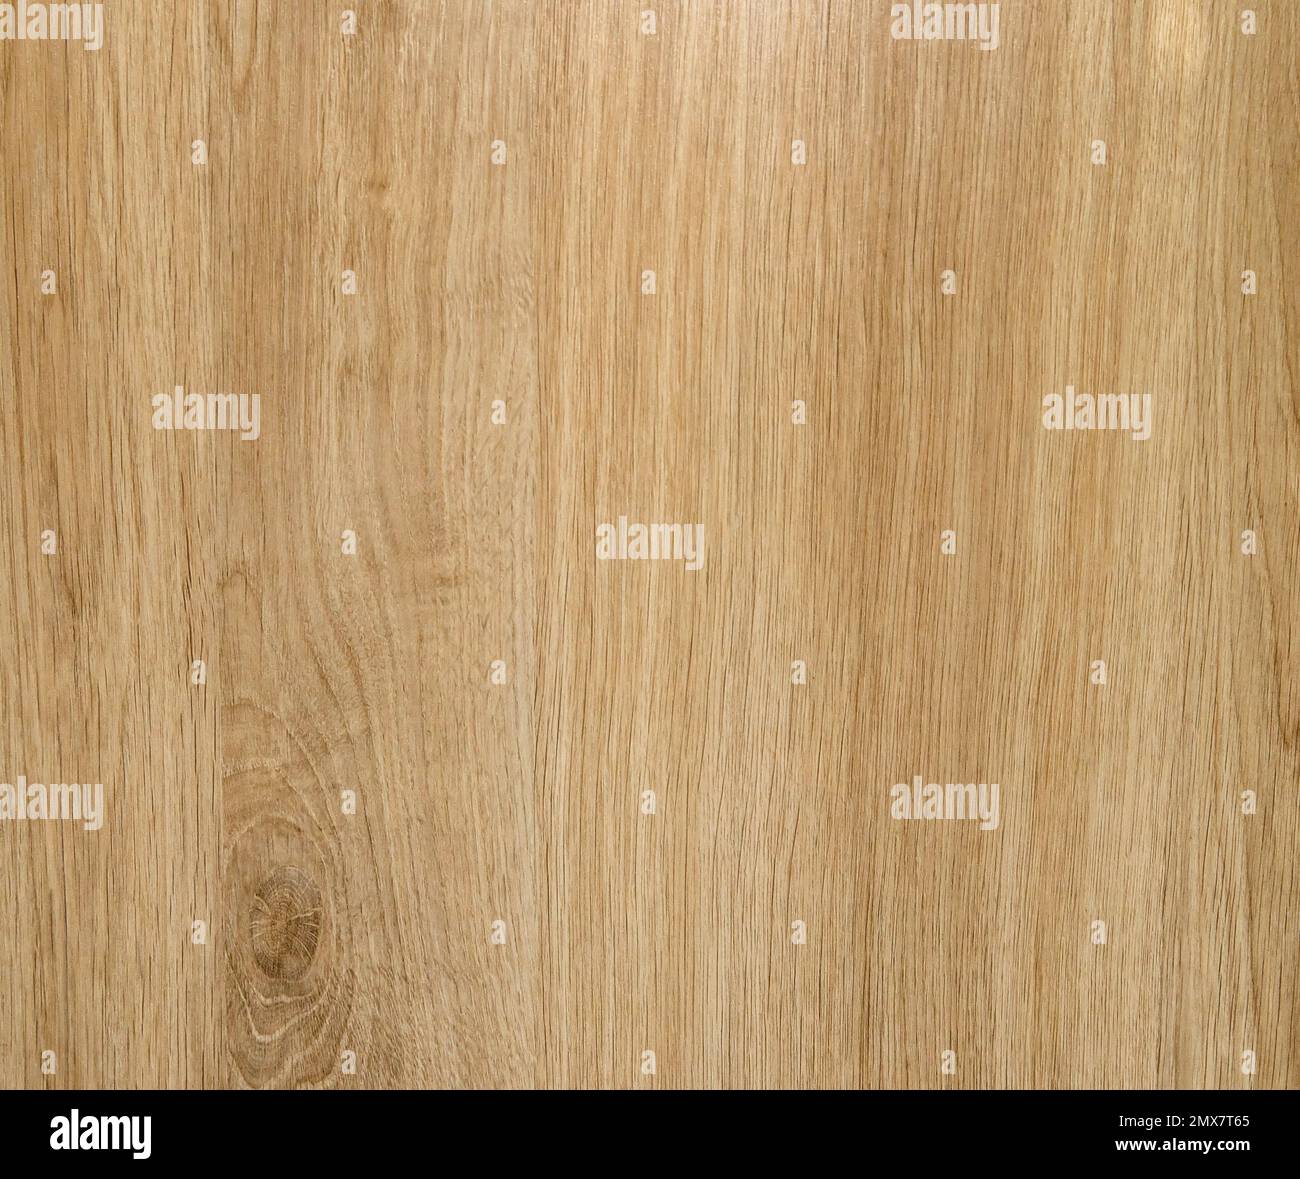 texture of light wood panels Stock Photo